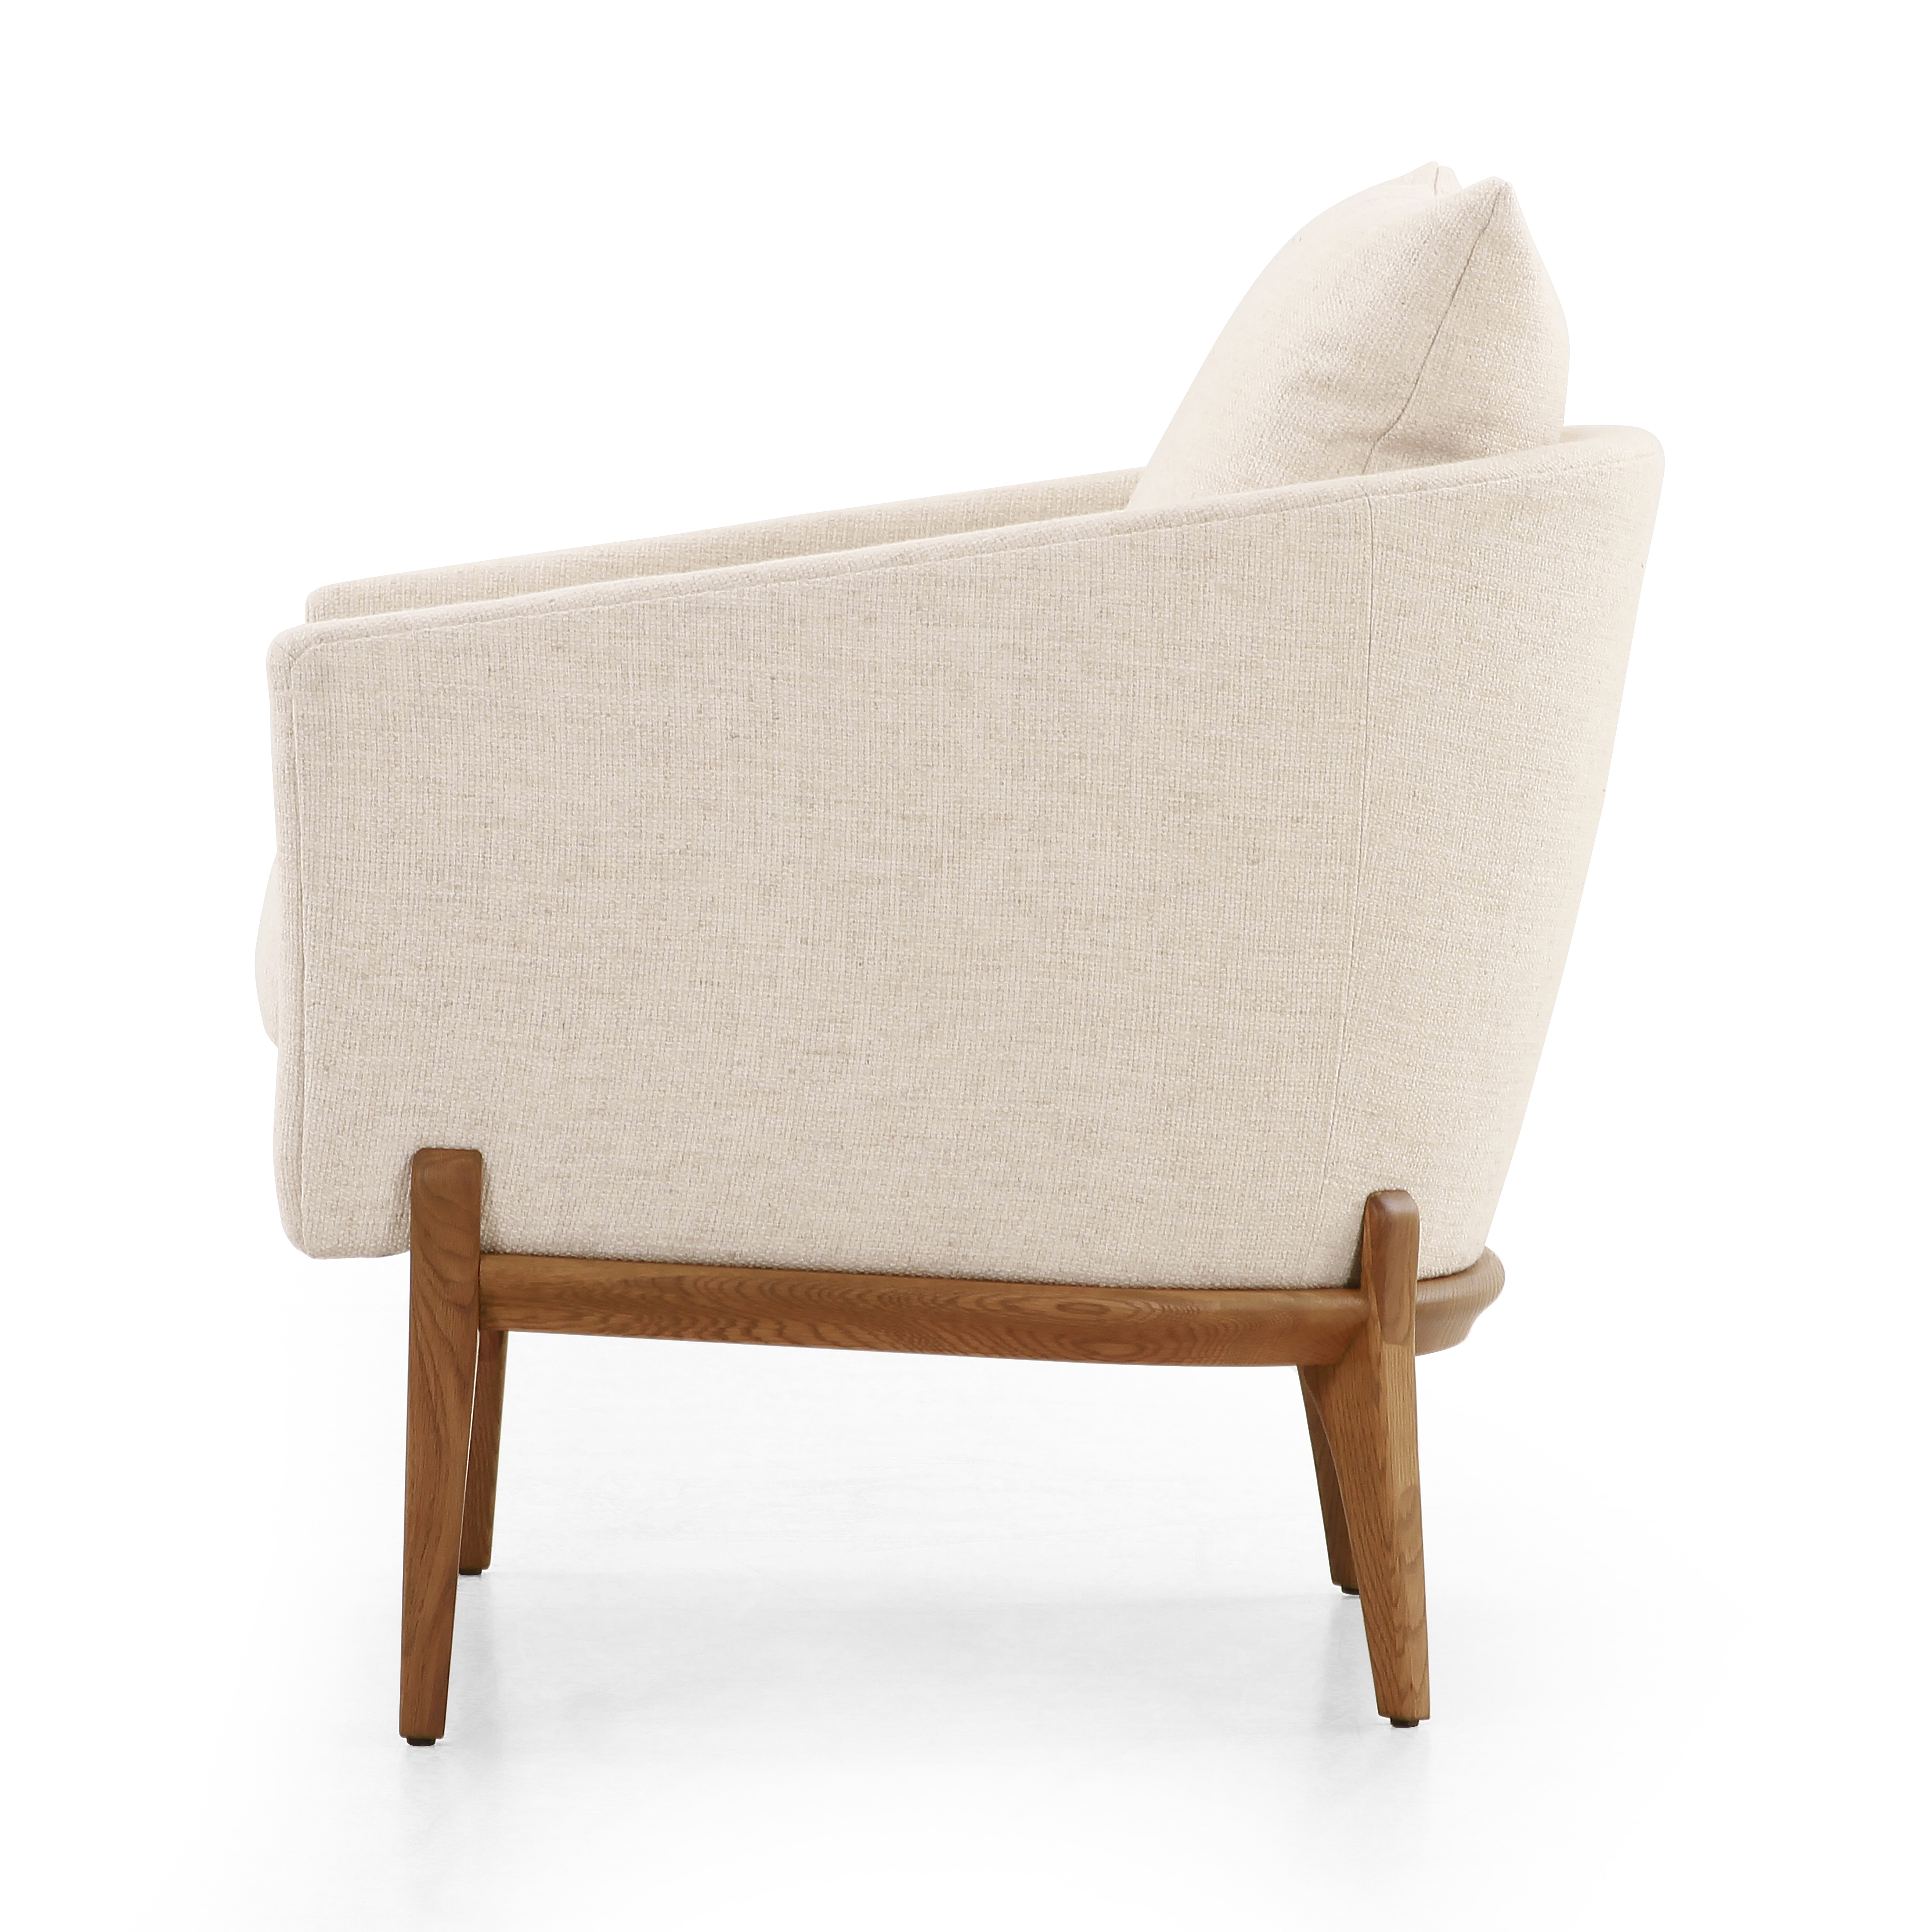 Copeland Chair-Thames Cream - Image 4